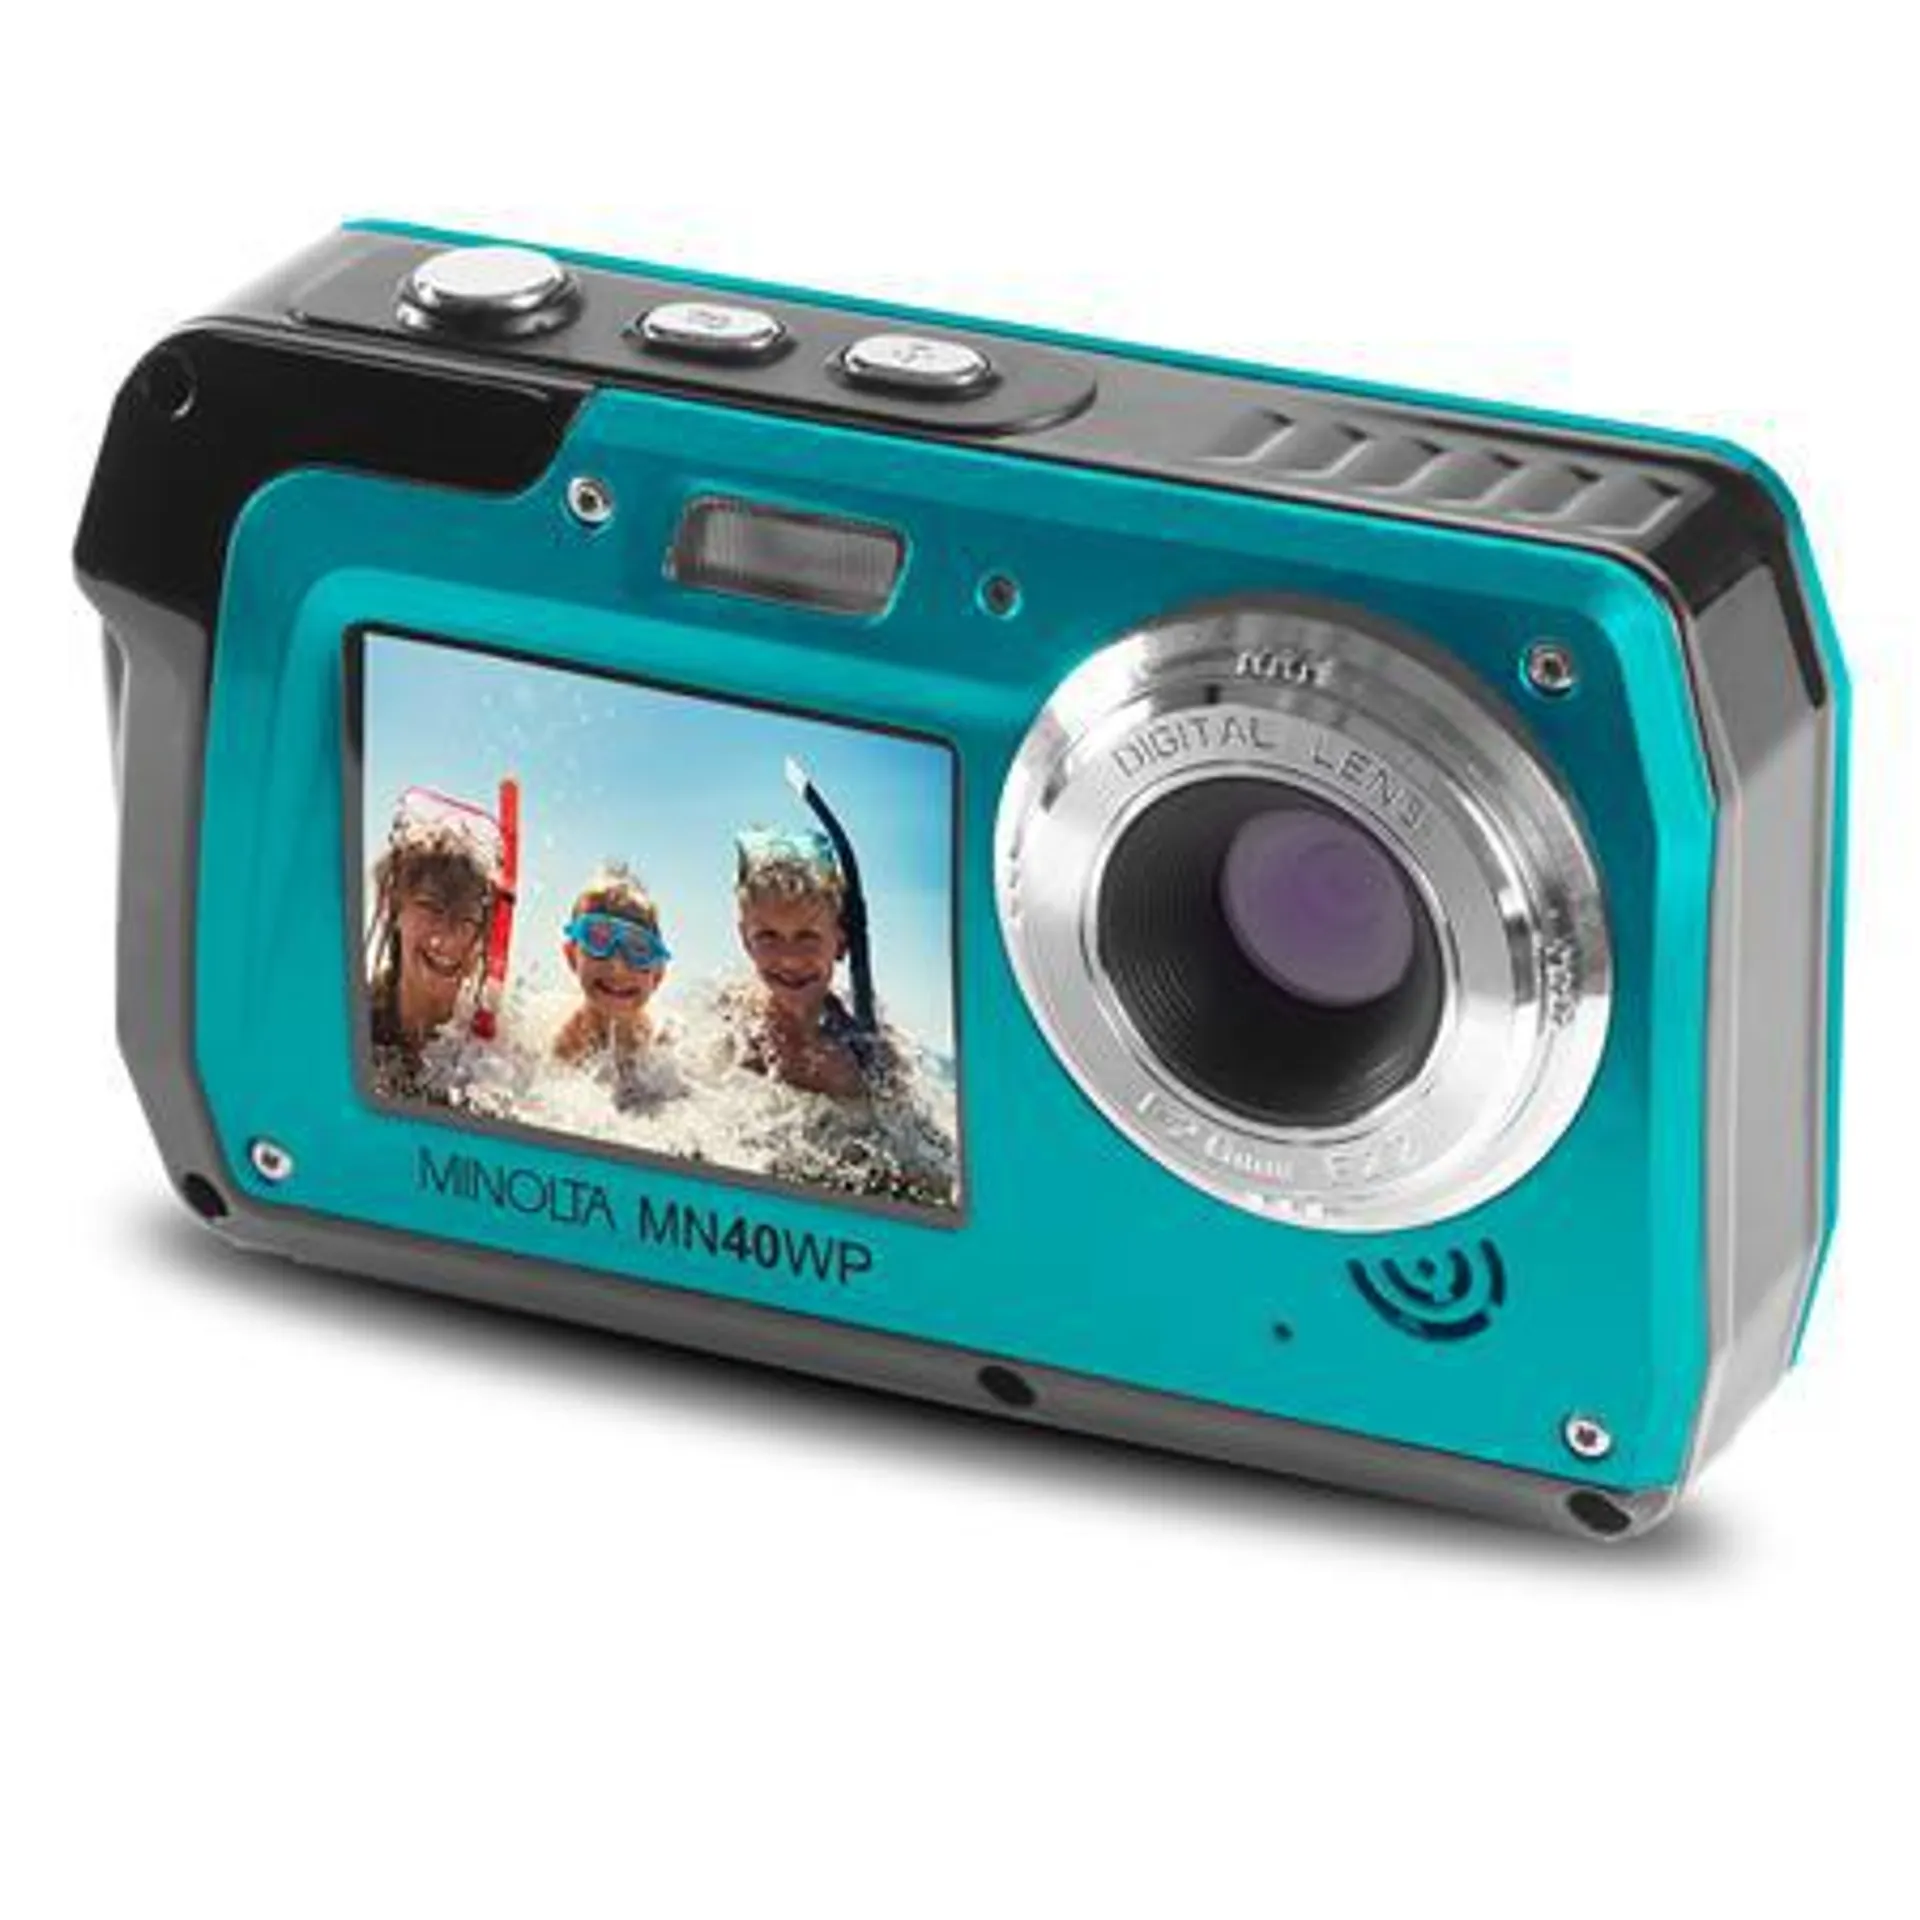 Minolta MN40WP 48MP QHD Dual LCD Screen Waterproof Camera, Blue